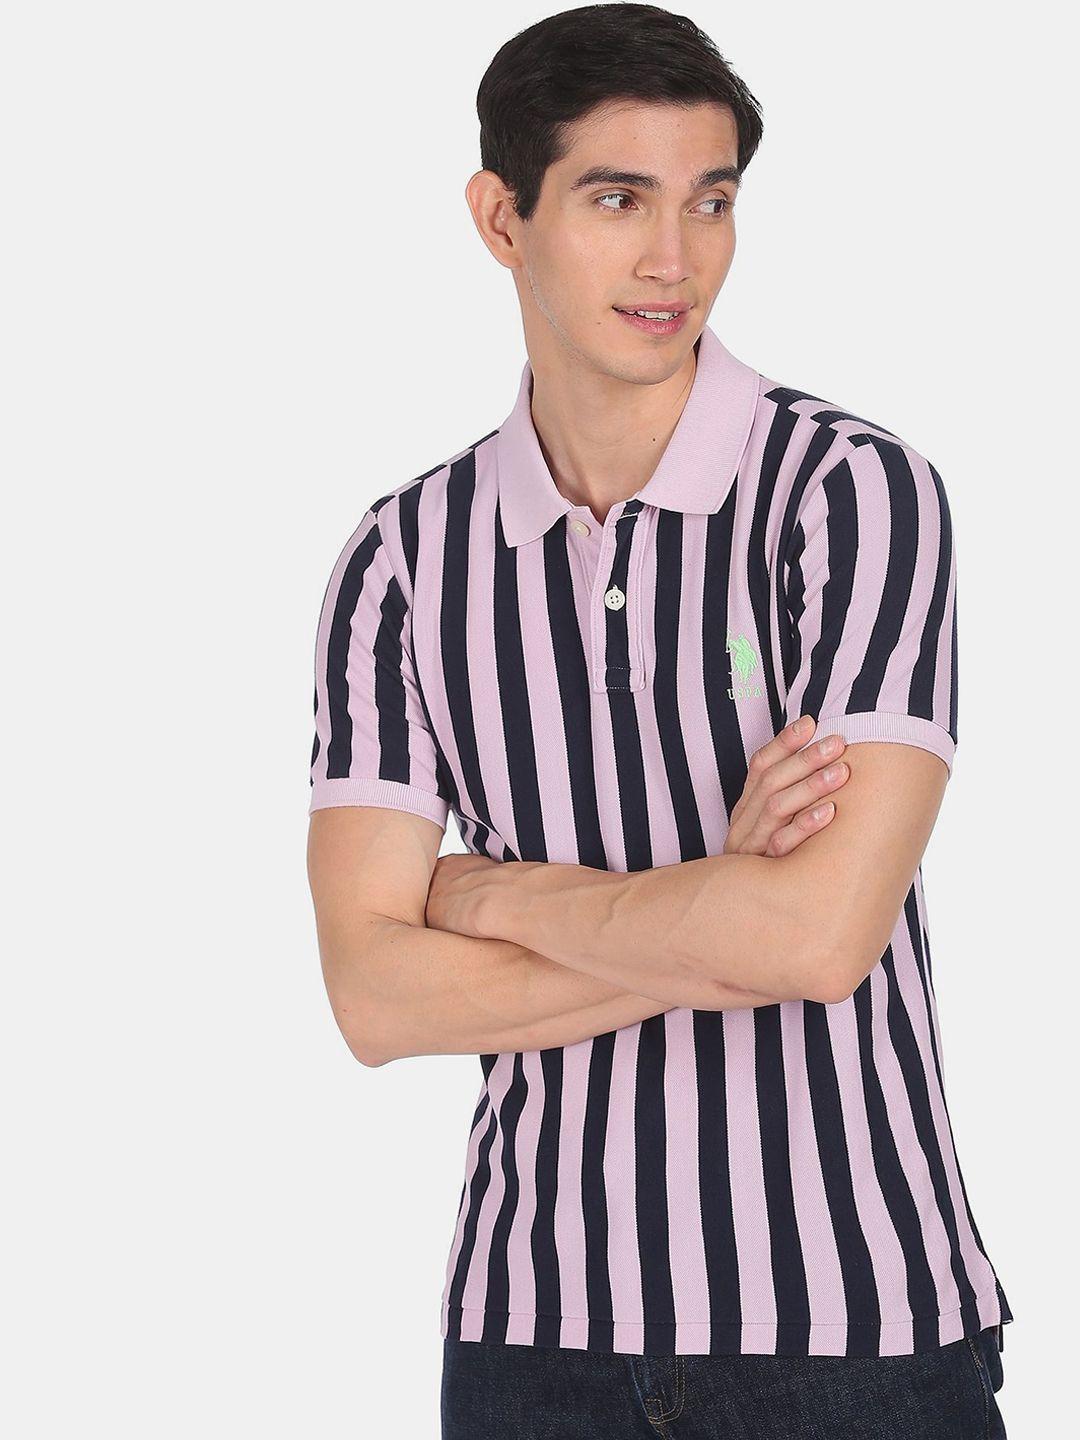 u.s. polo assn. men pink & black striped polo collar t-shirt